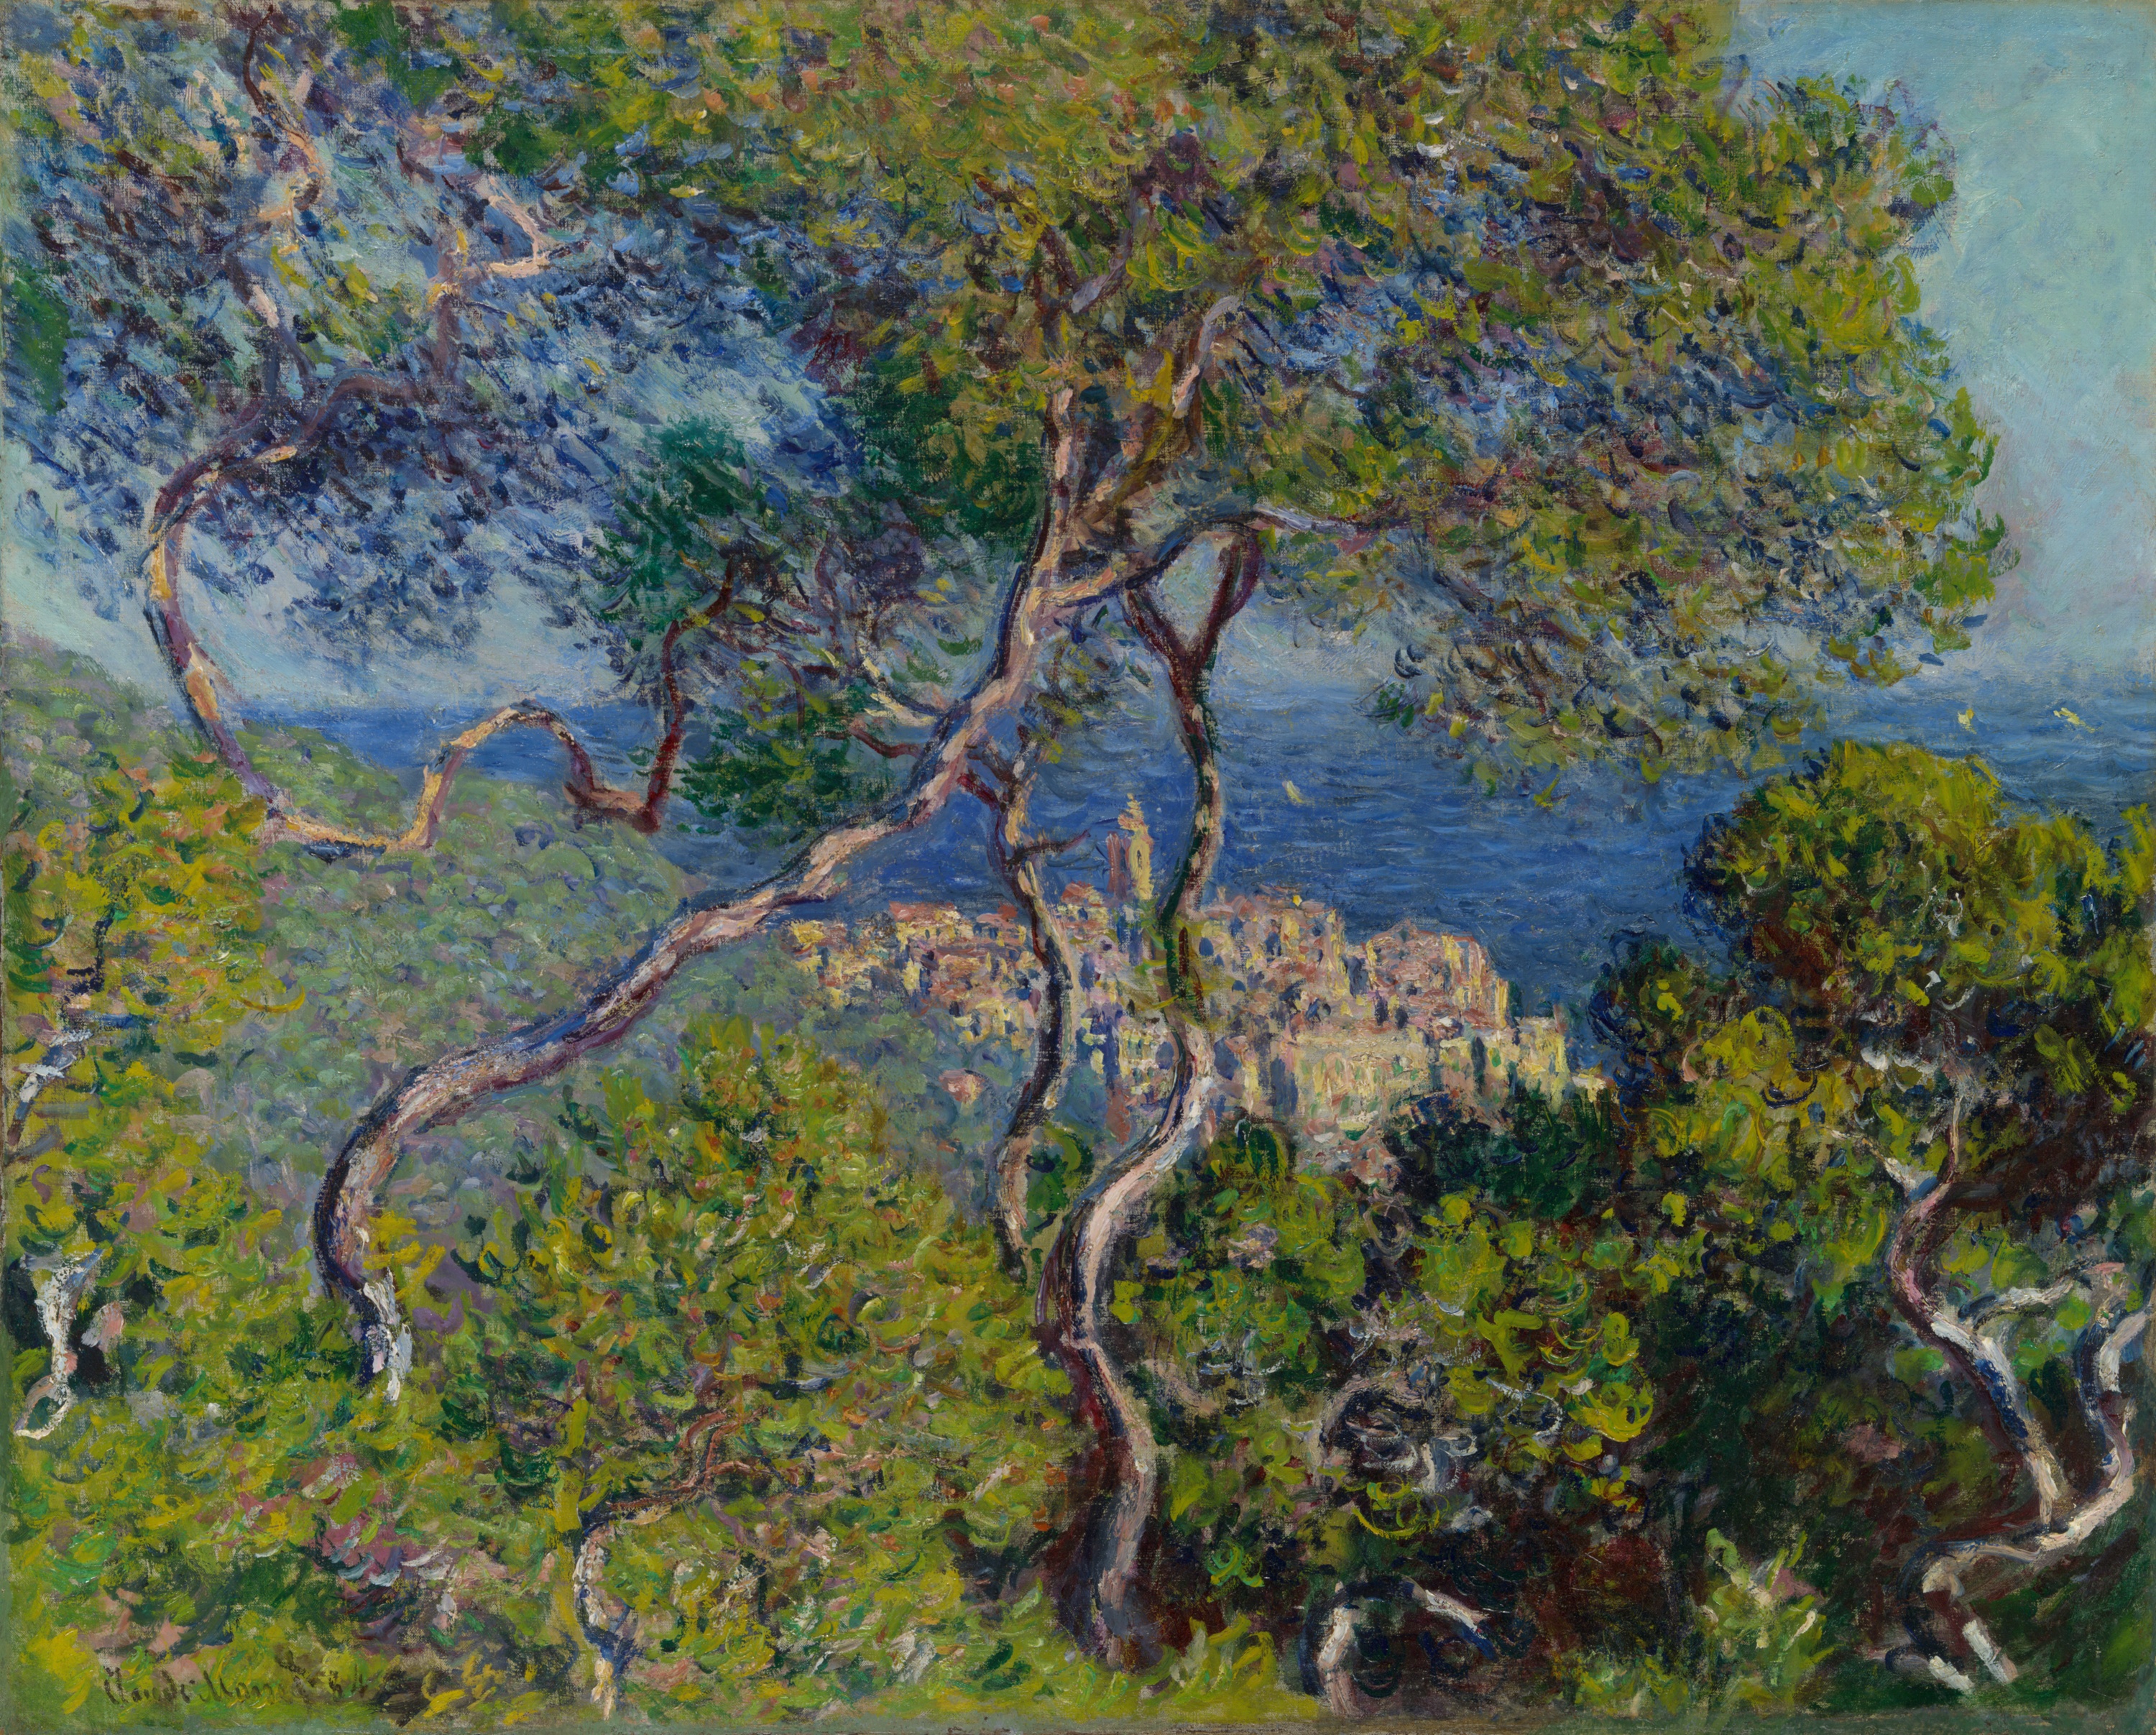 Бордигера by Claude Monet - 1884. - 65 × 80.8 cm 